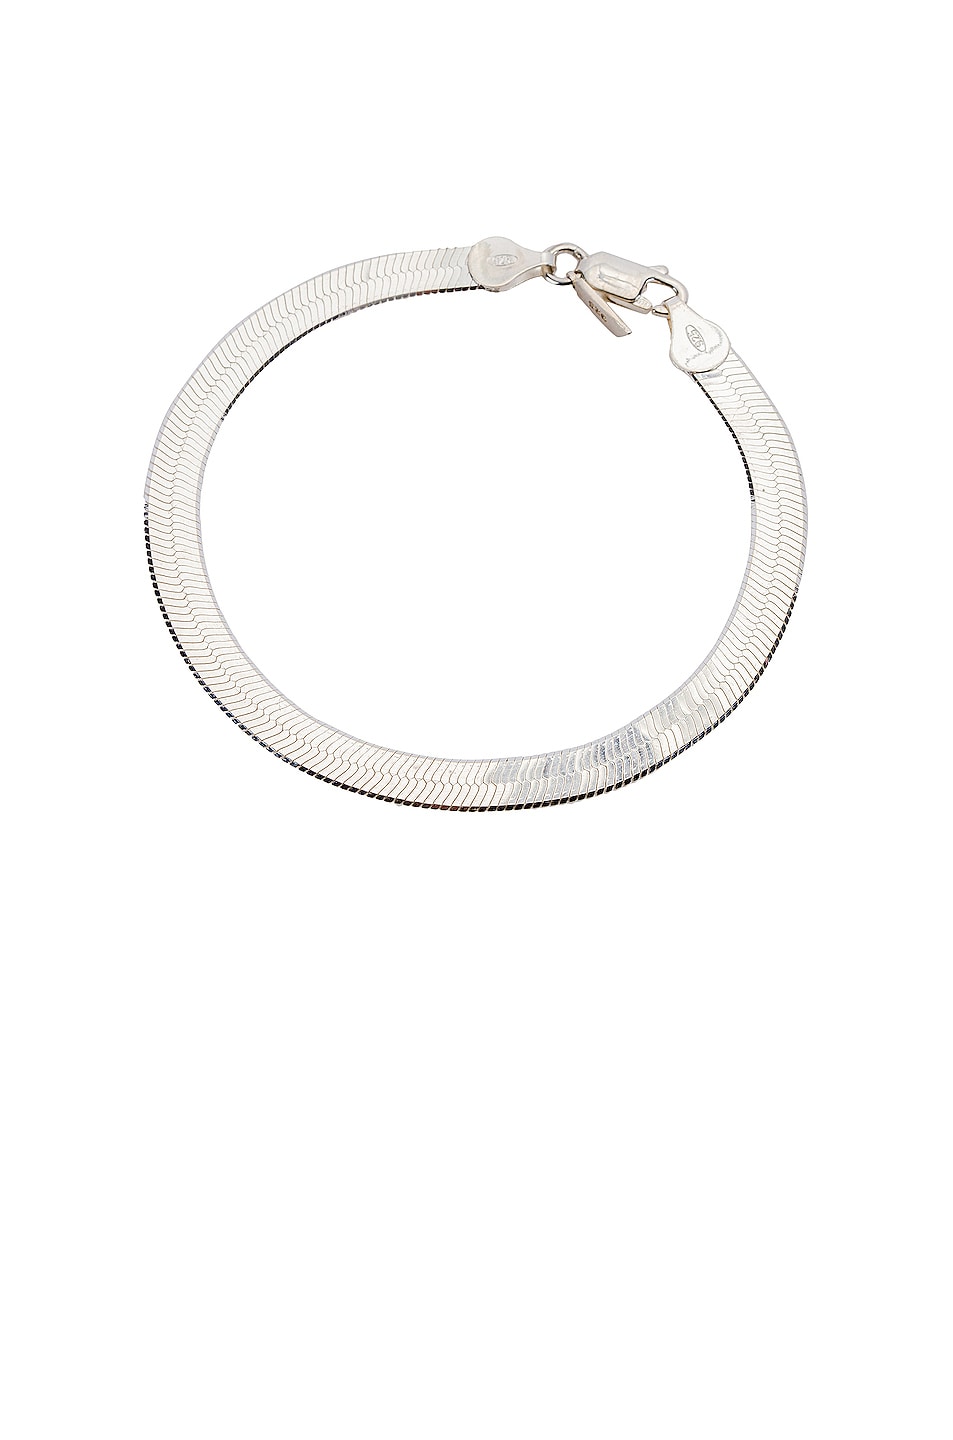 Image 1 of Loren Stewart XL Herringbone Bracelet in Sterling Silver